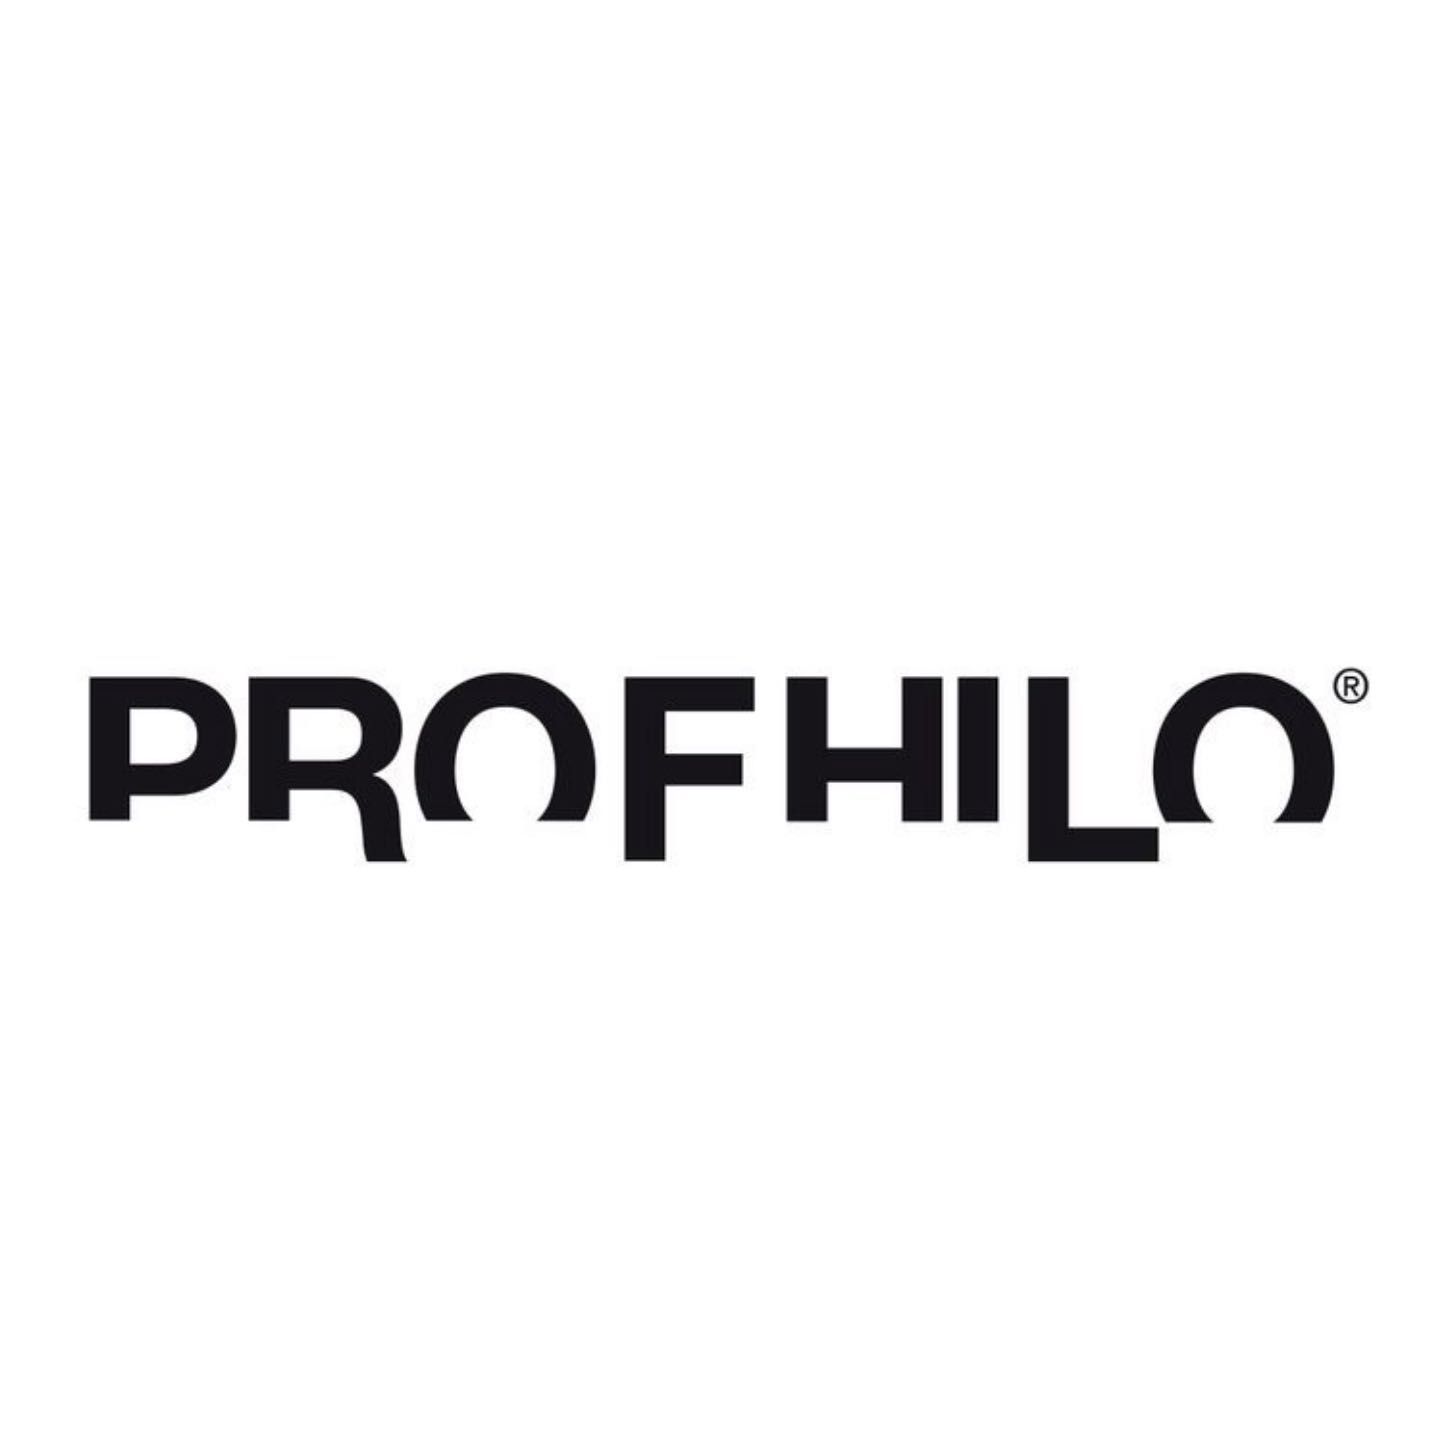 The Profhilo Rejuvenating & Anti-oxidising Boost portfolio